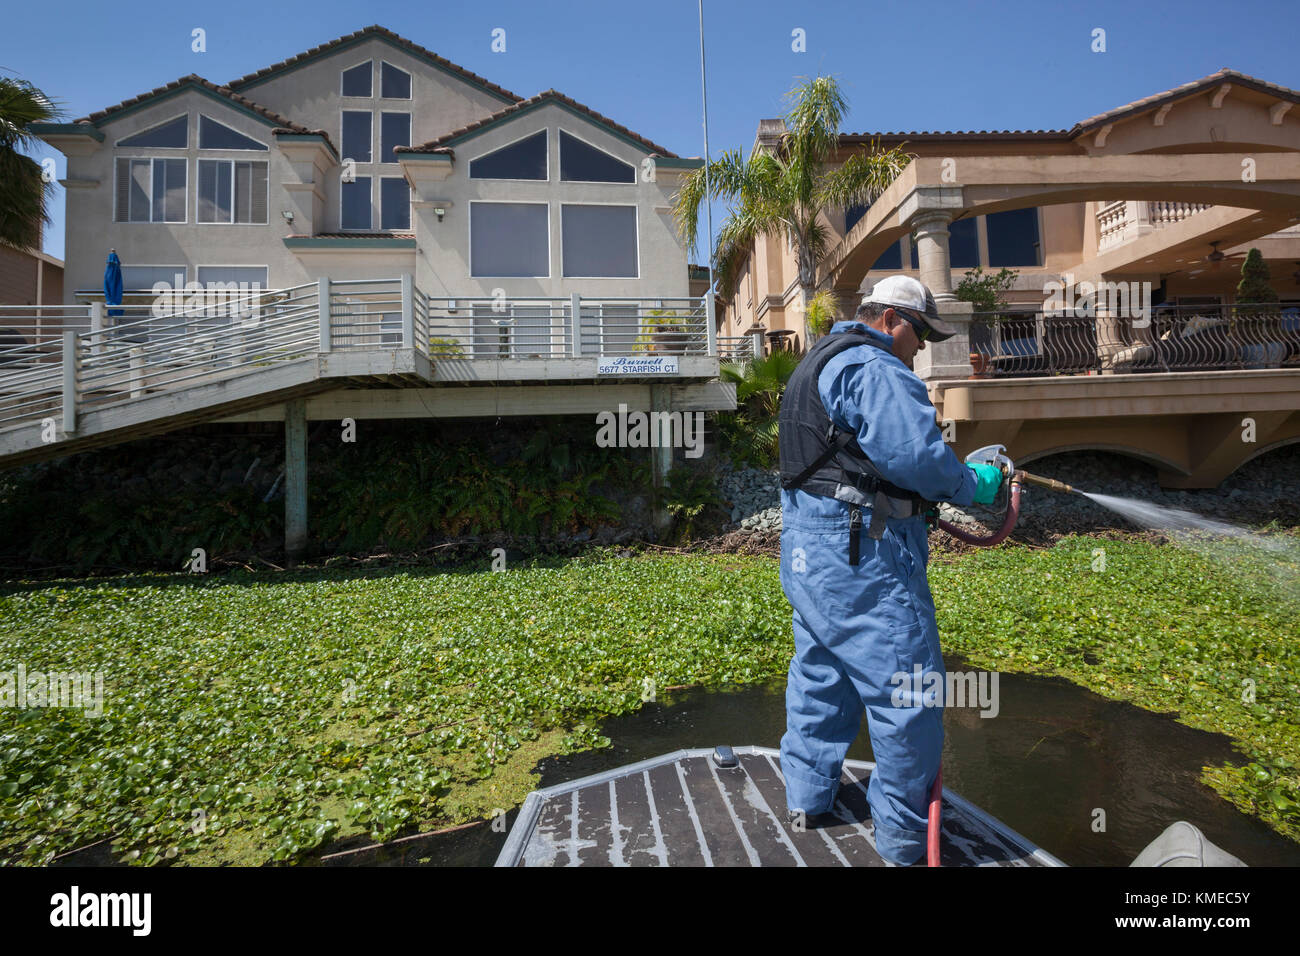 Man spraying water hyacinth with chemicals, Stockton, California, USA Stock Photo